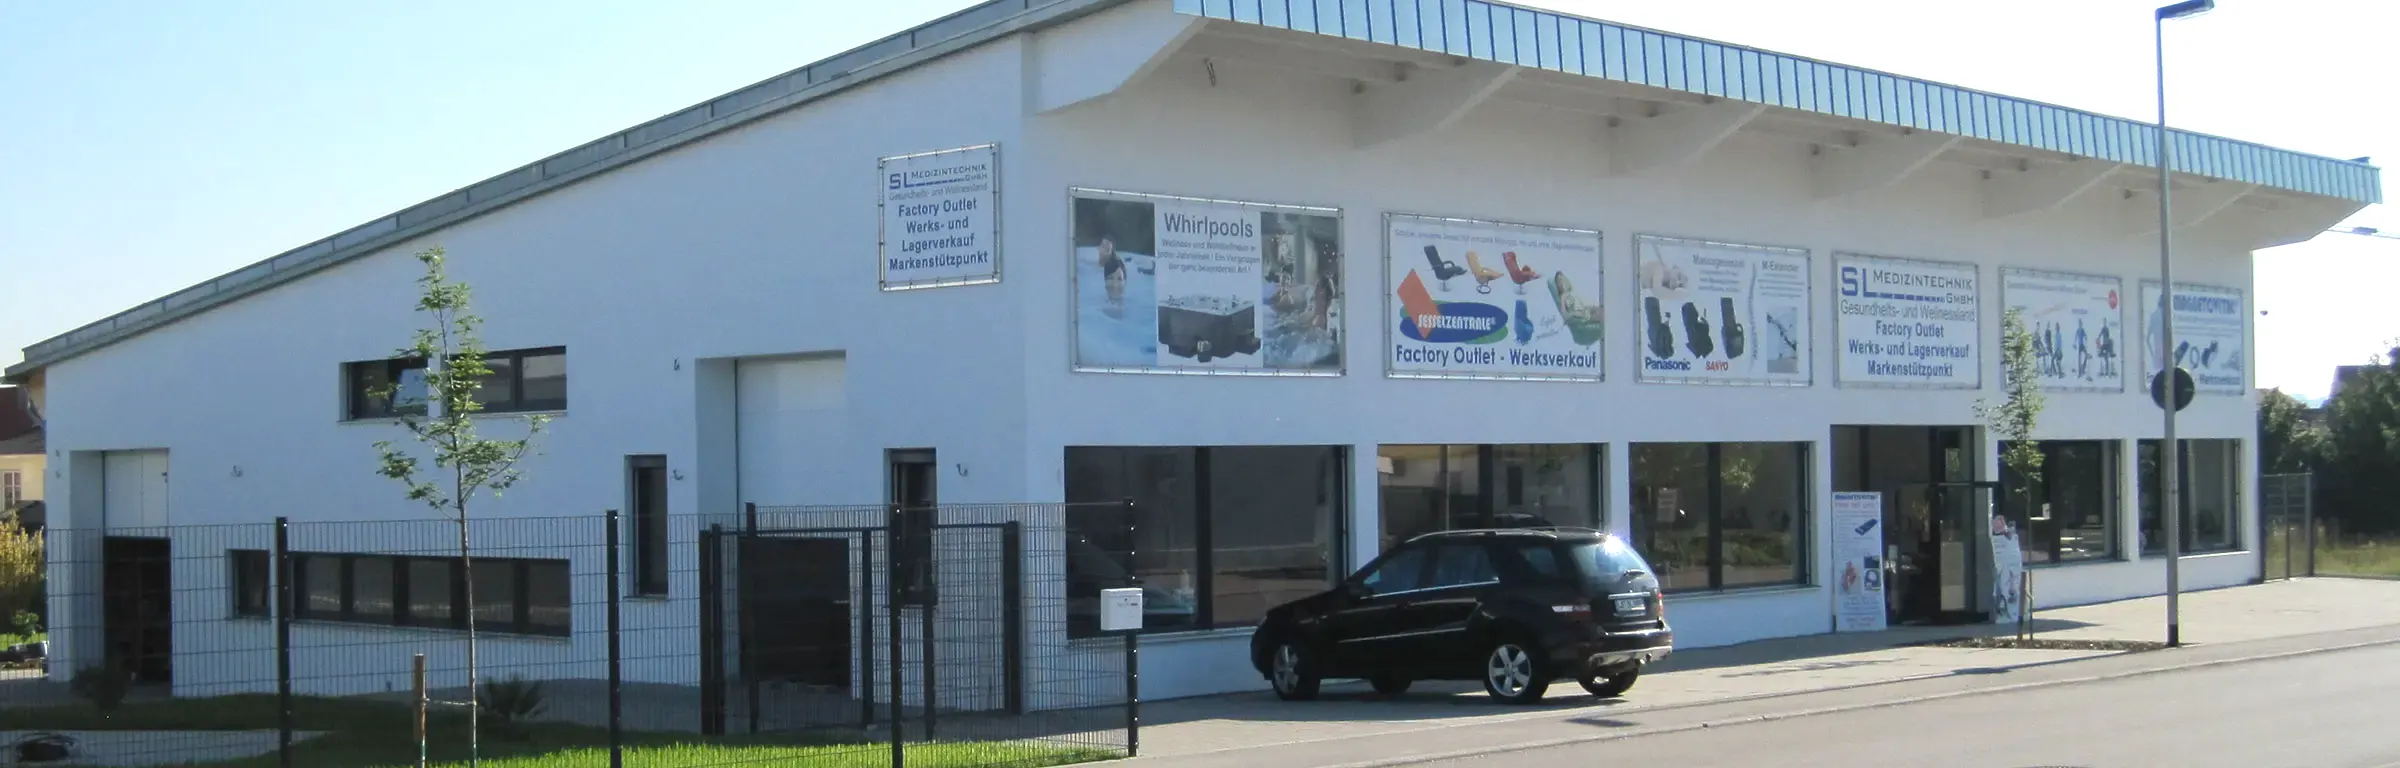 SL-Medizintechnik-GmbH Firmengebäude